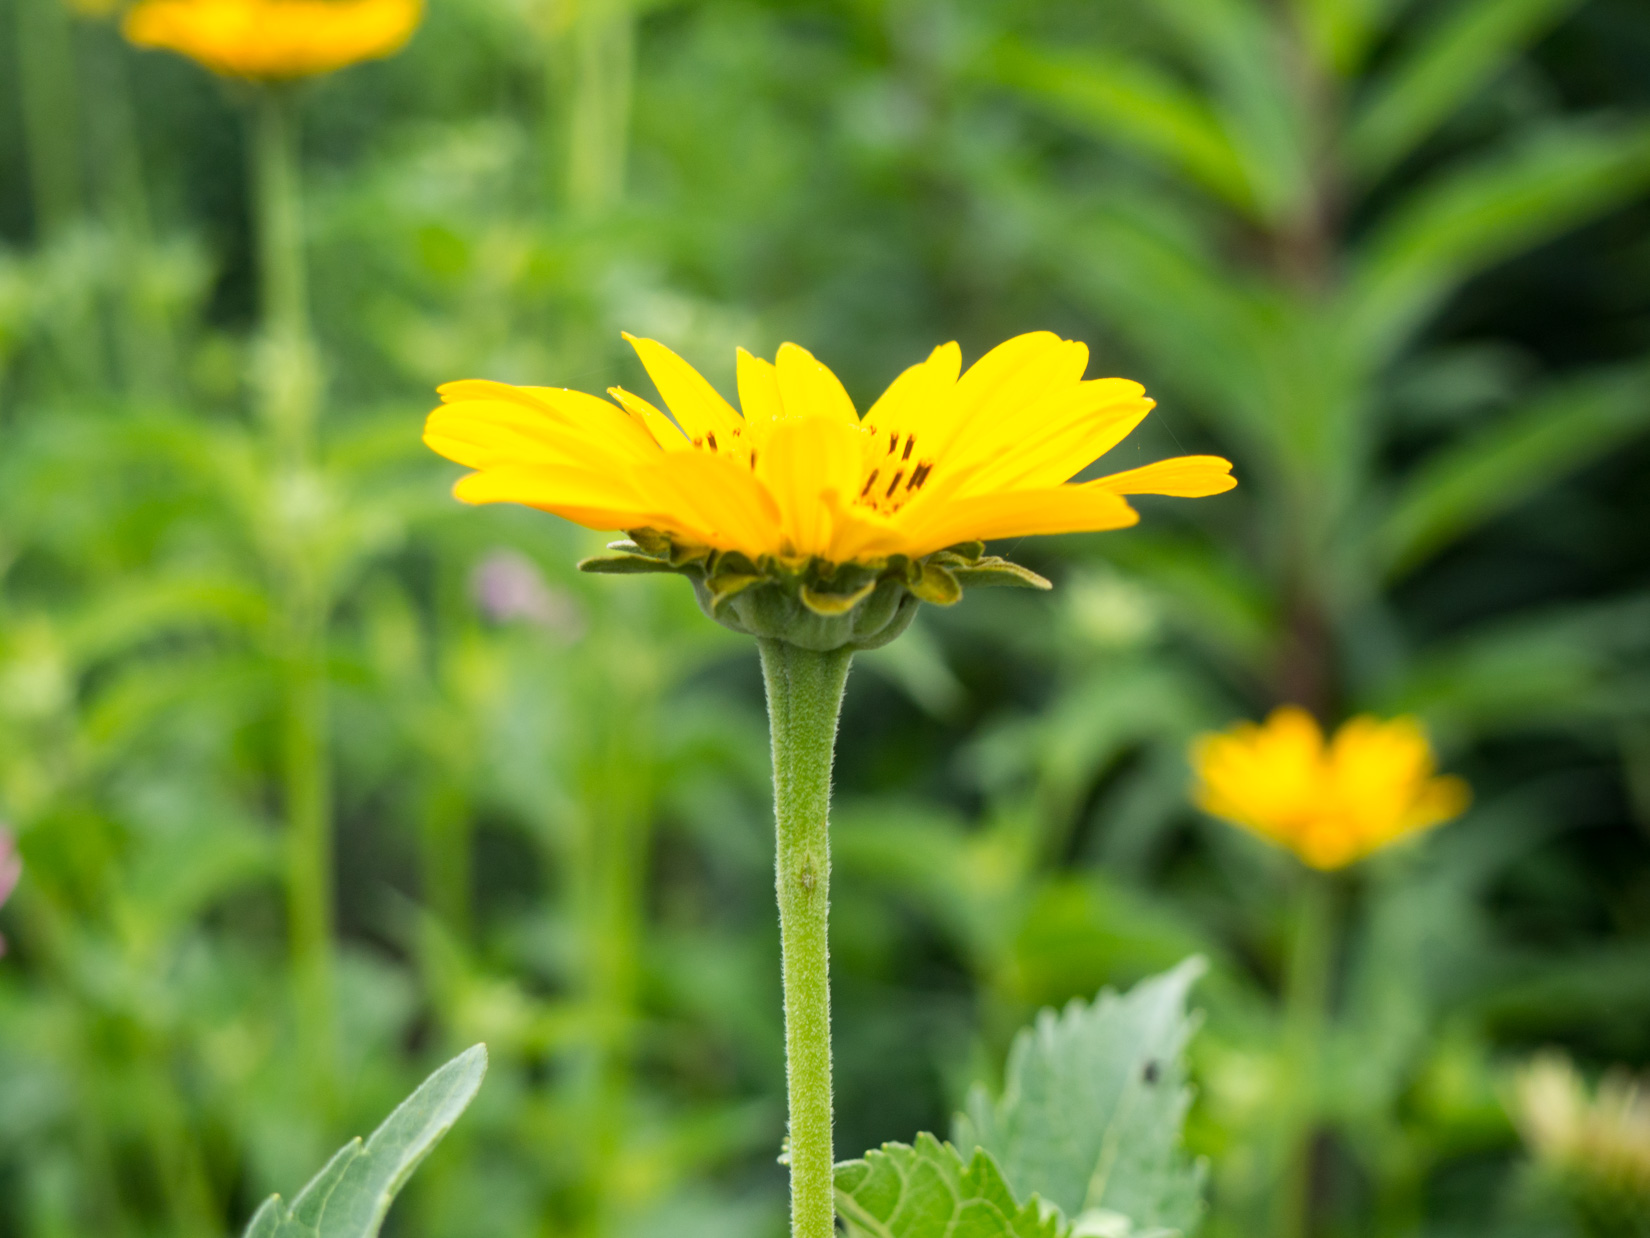 Yellow Flower in Focus